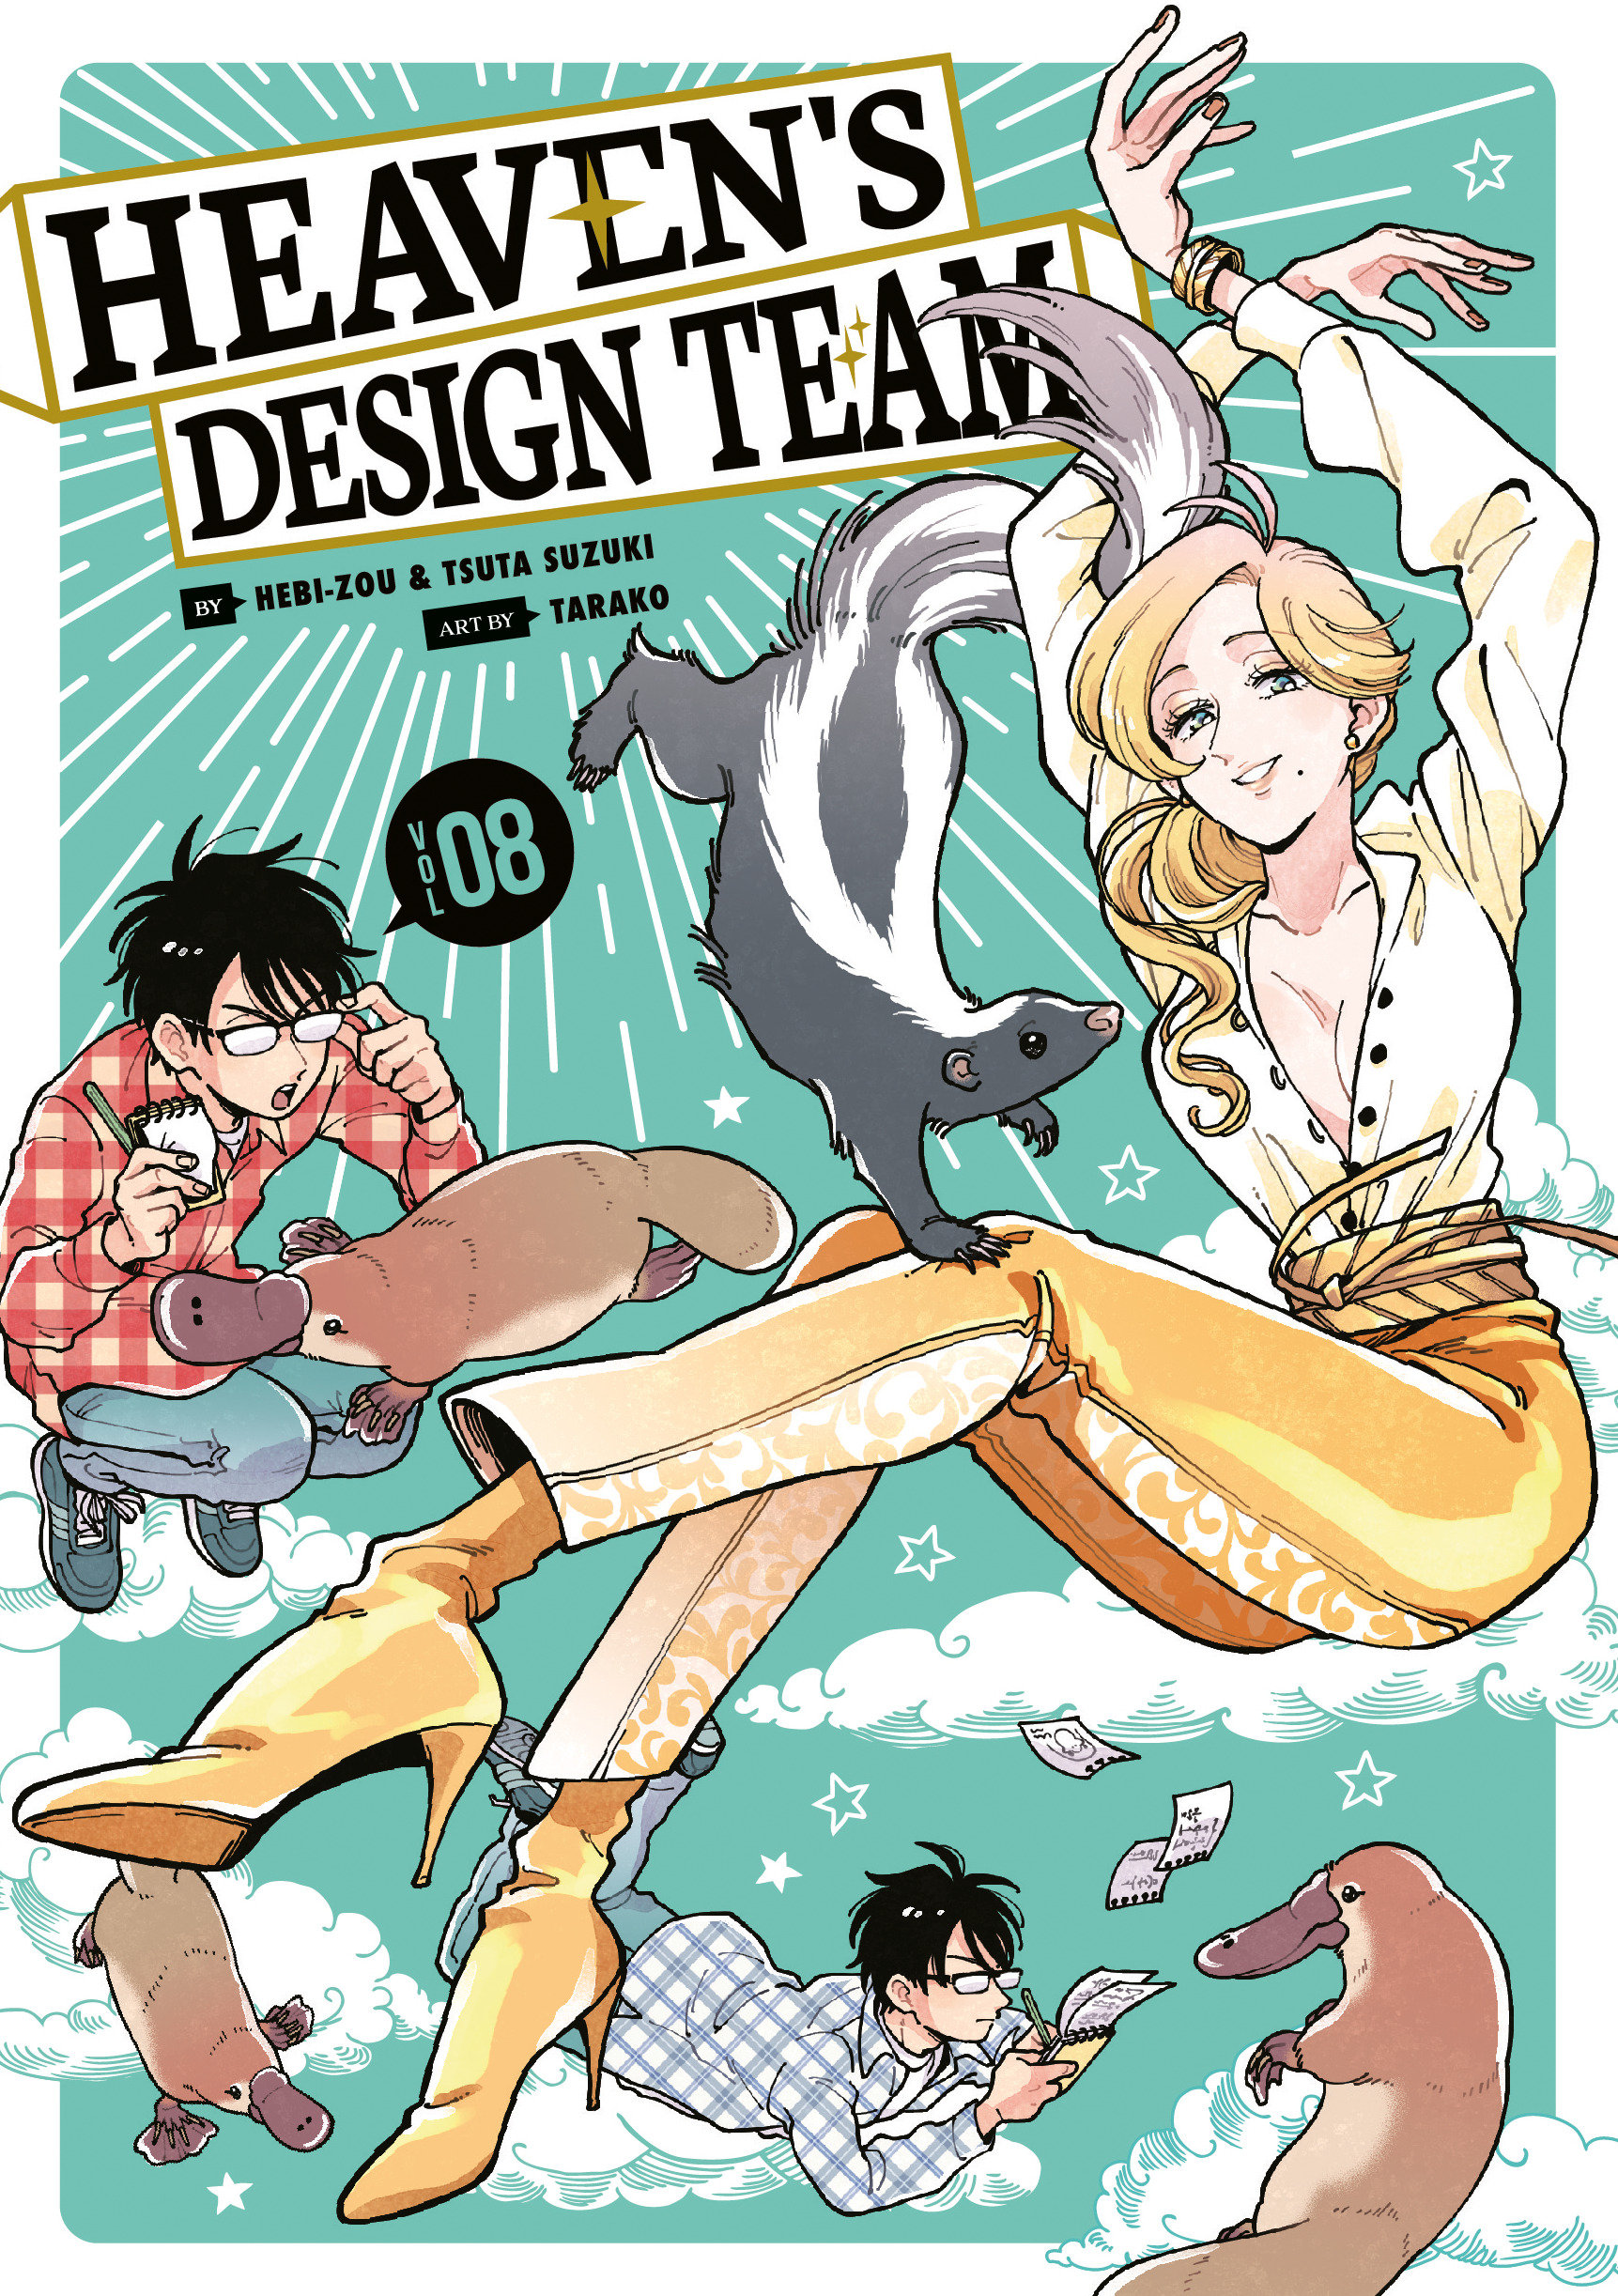 Heaven's Design Team Manga Volume 8